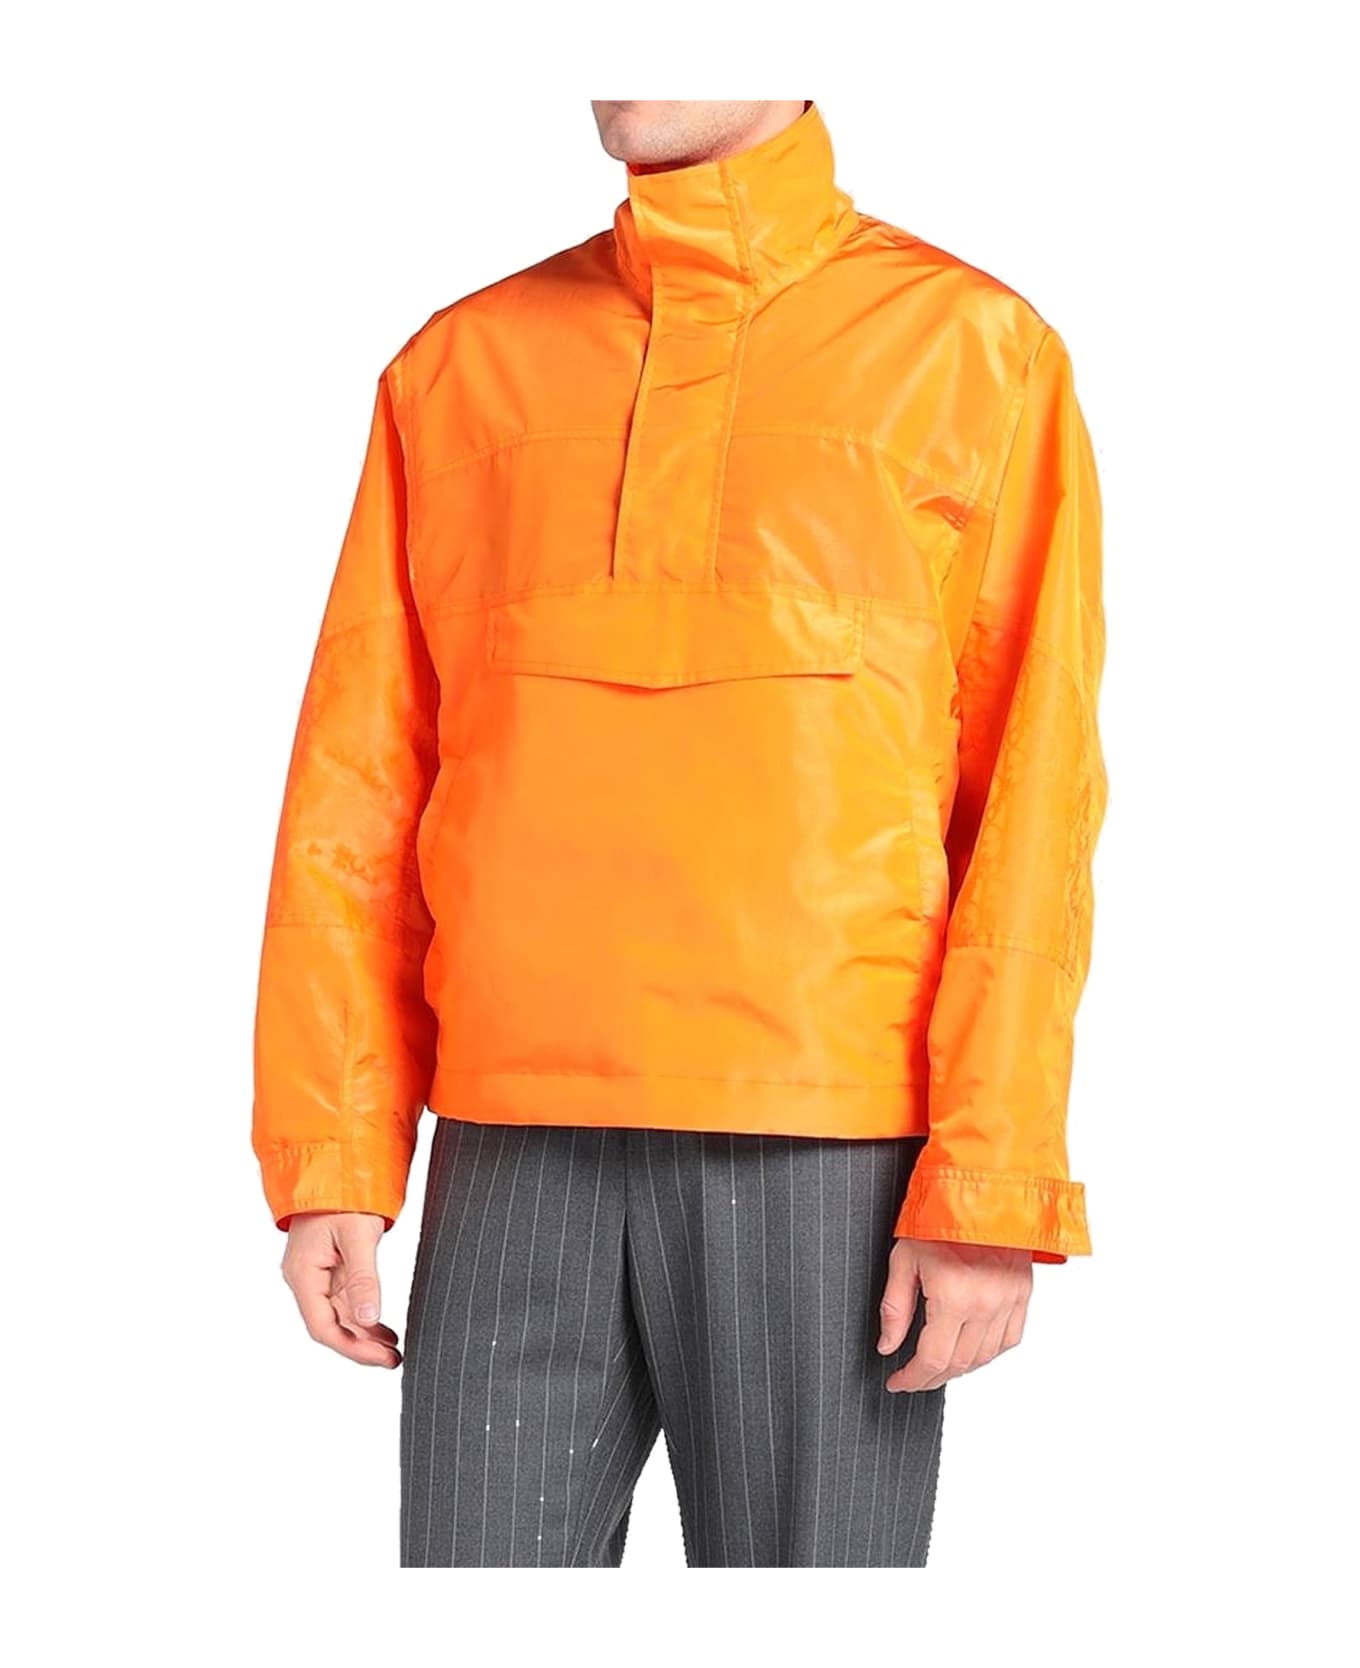 Dior Windbreaker Jacket - Orange